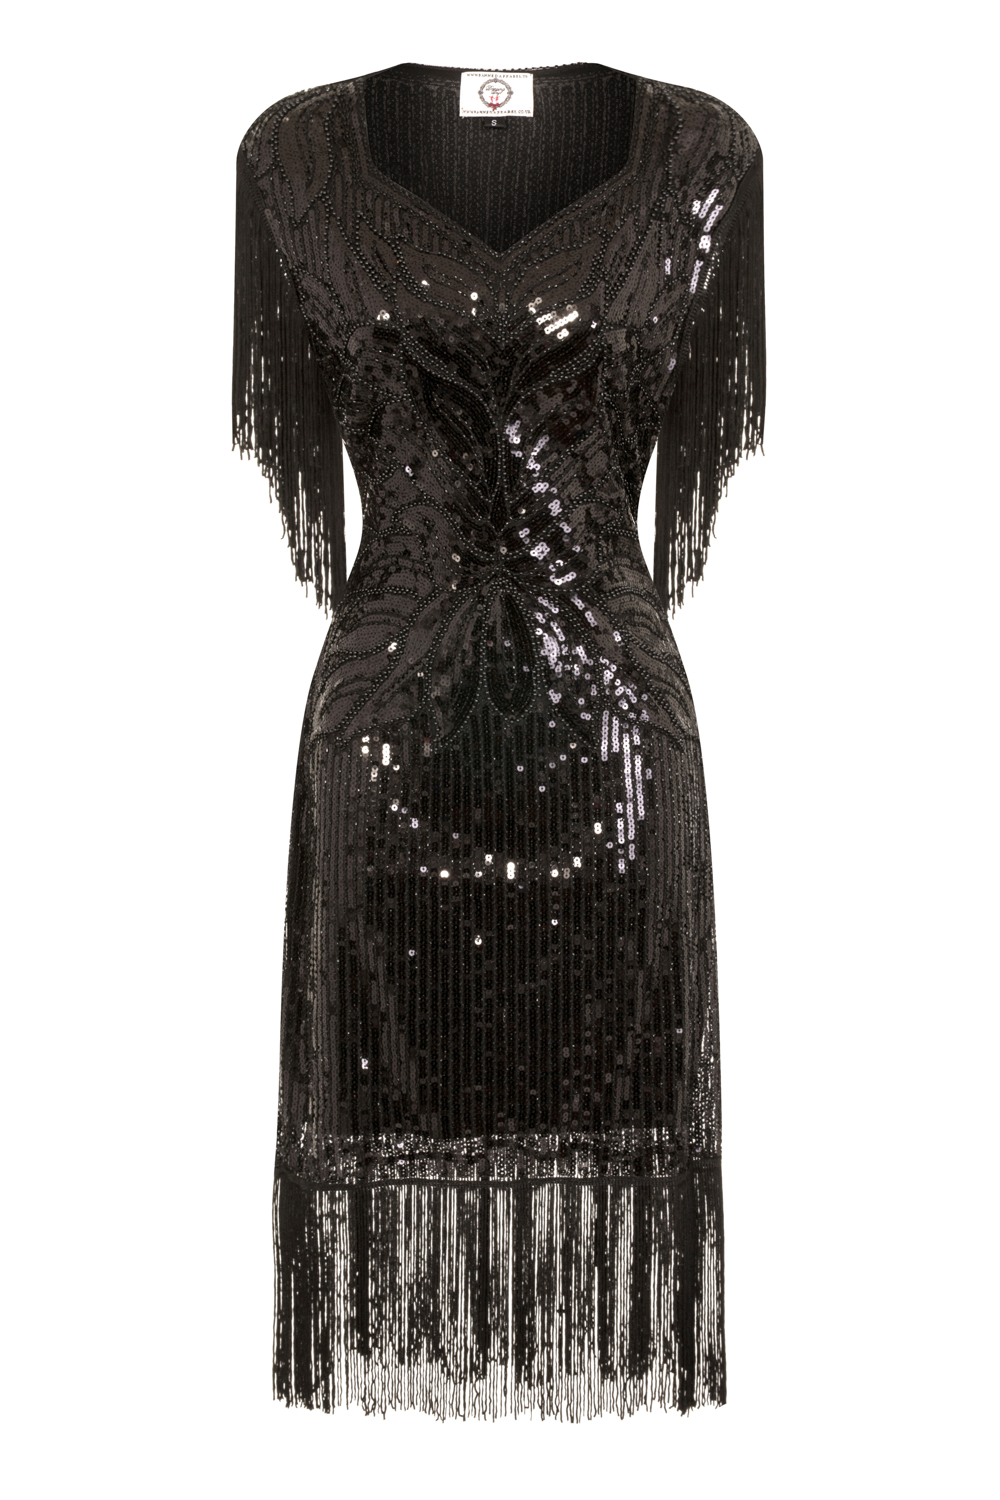 black fringe dress 1920s